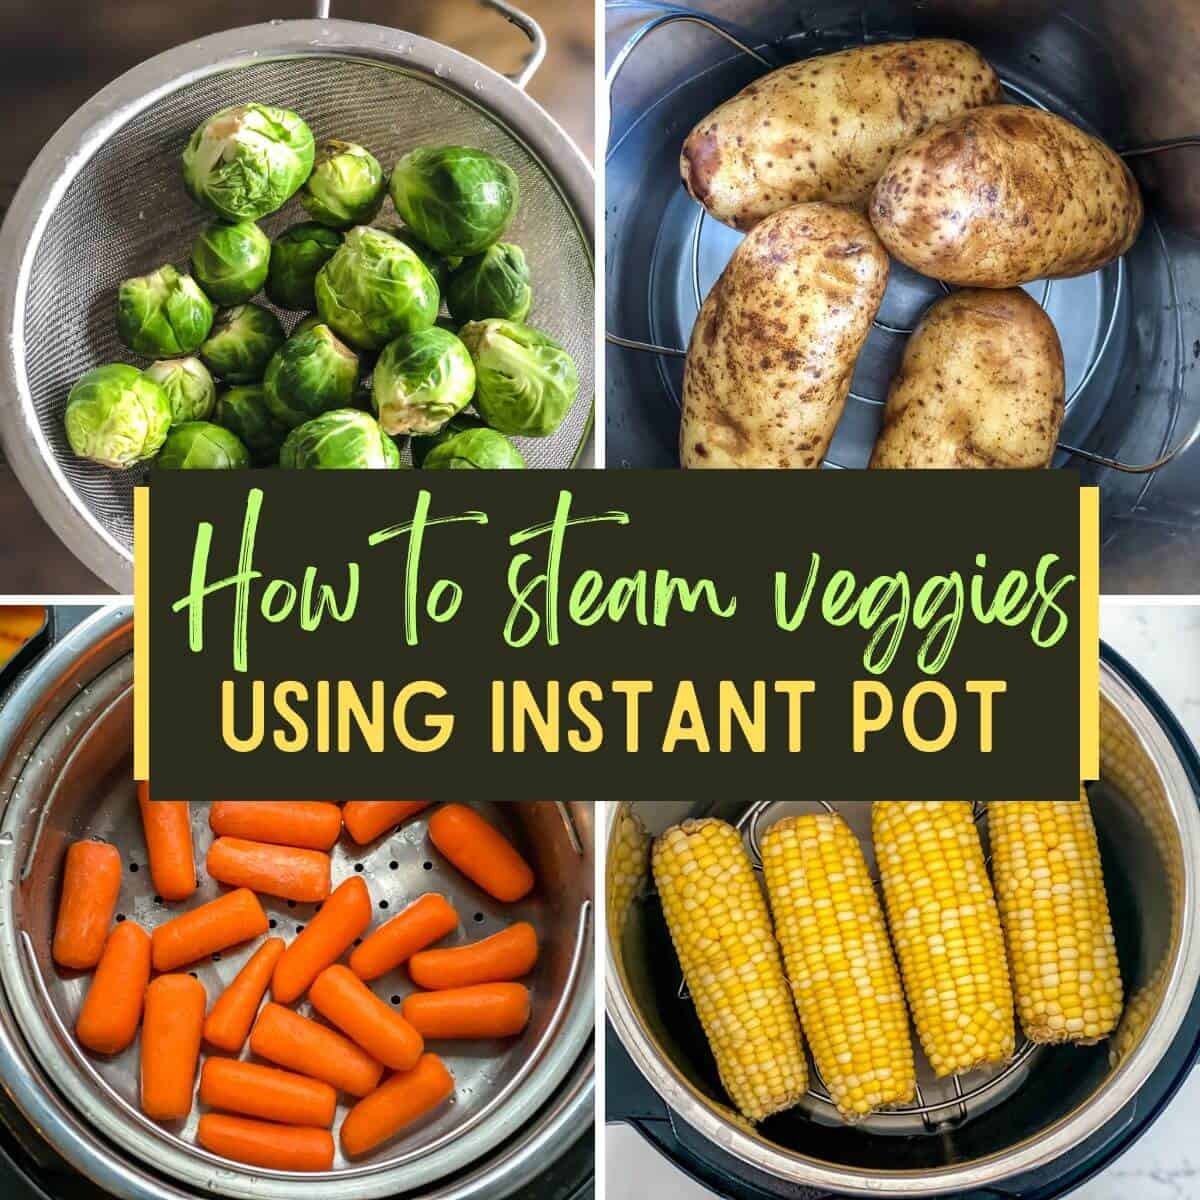 Instant Pot steamed vegetables – a complete guide